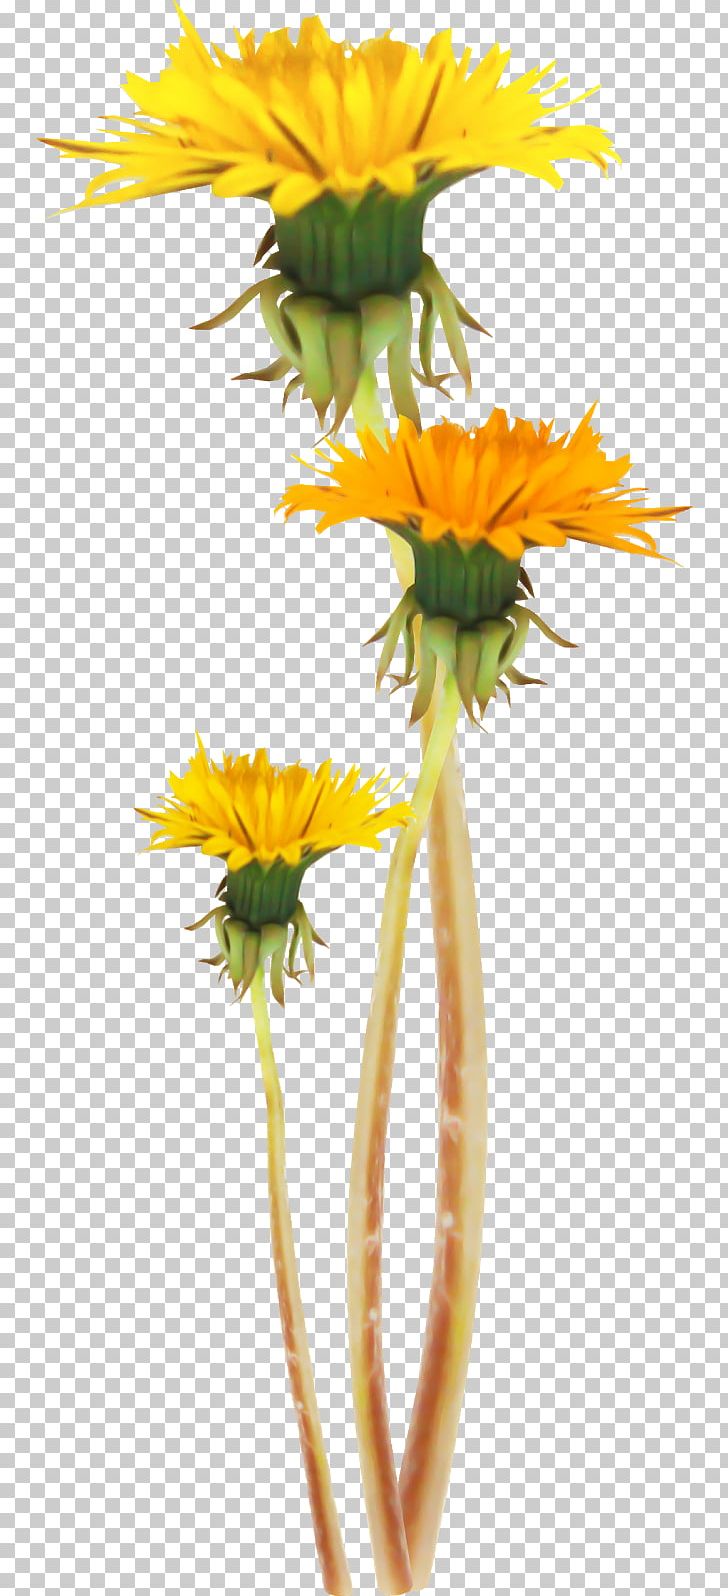 Common Sunflower Dandelion Plant Stem PNG, Clipart, Common Sunflower, Daisy, Daisy Family, Dandelion, Flora Free PNG Download